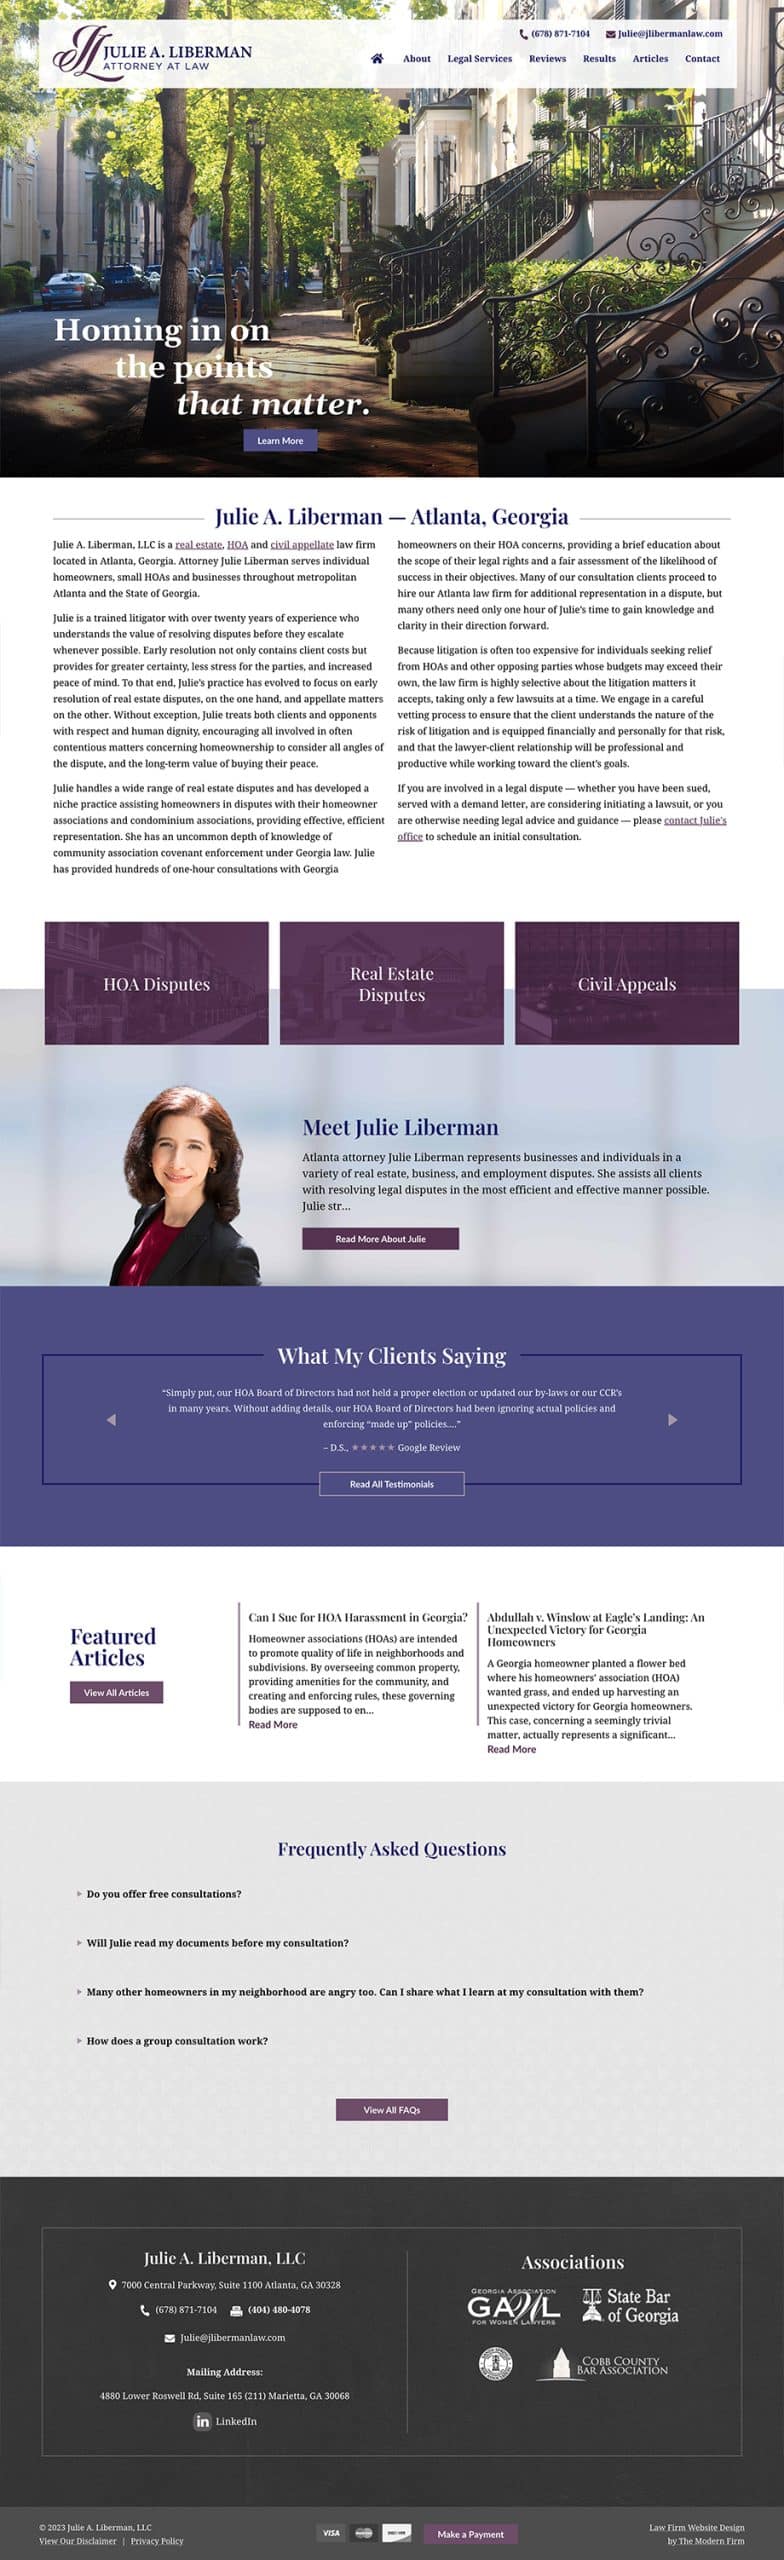 Law Firm Website Design for Julie A. Liberman, LLC